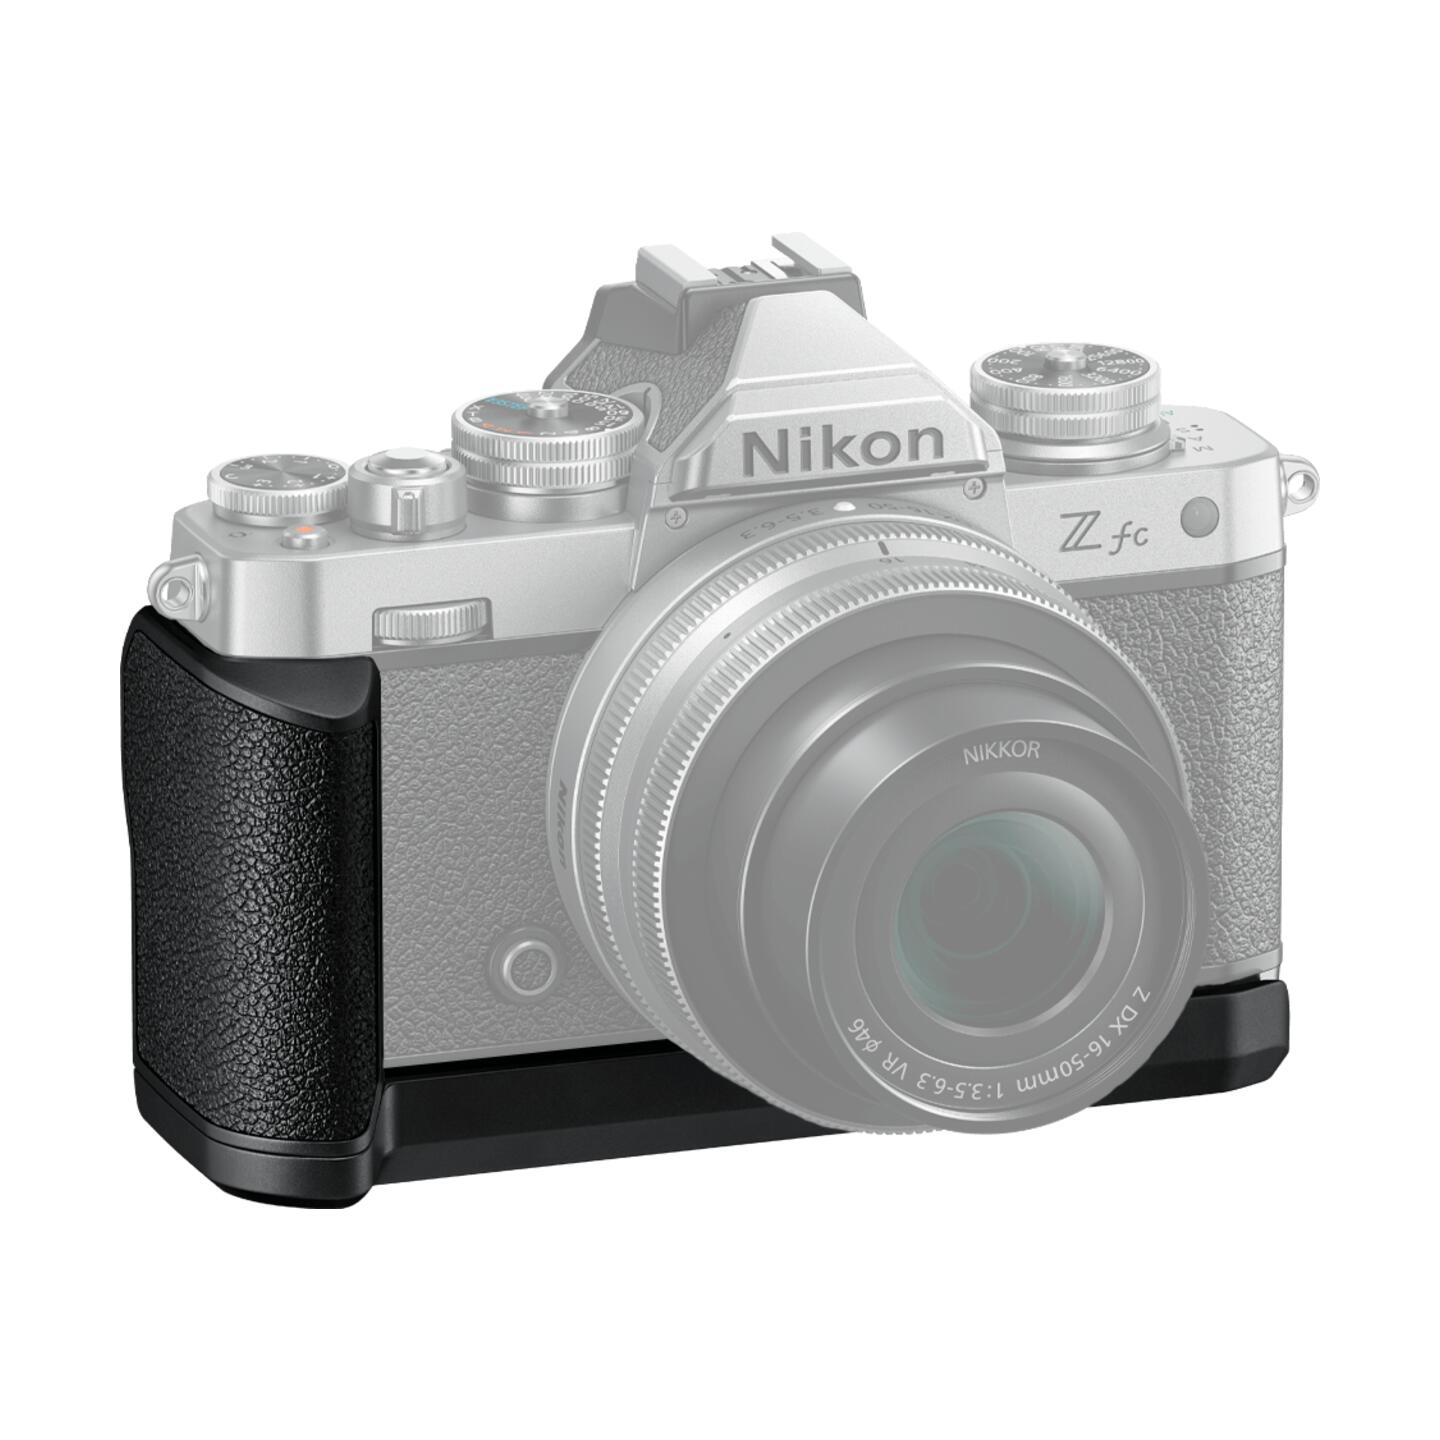 Nikon GR-1